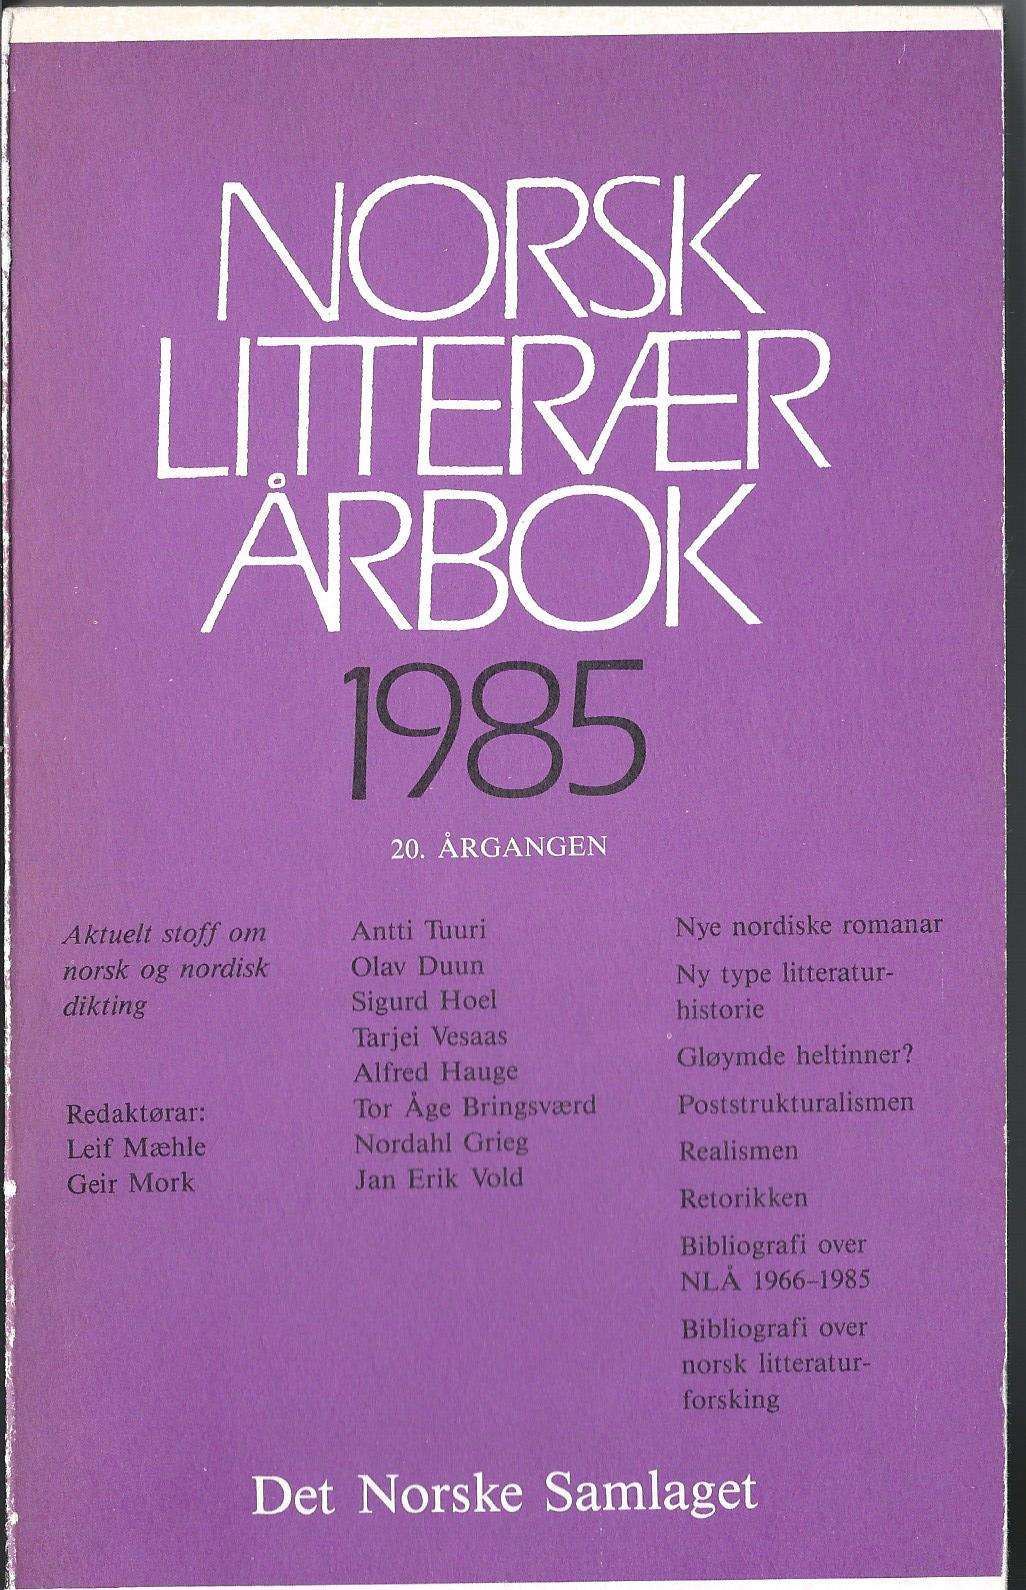 Norsk litterær årbok 1985